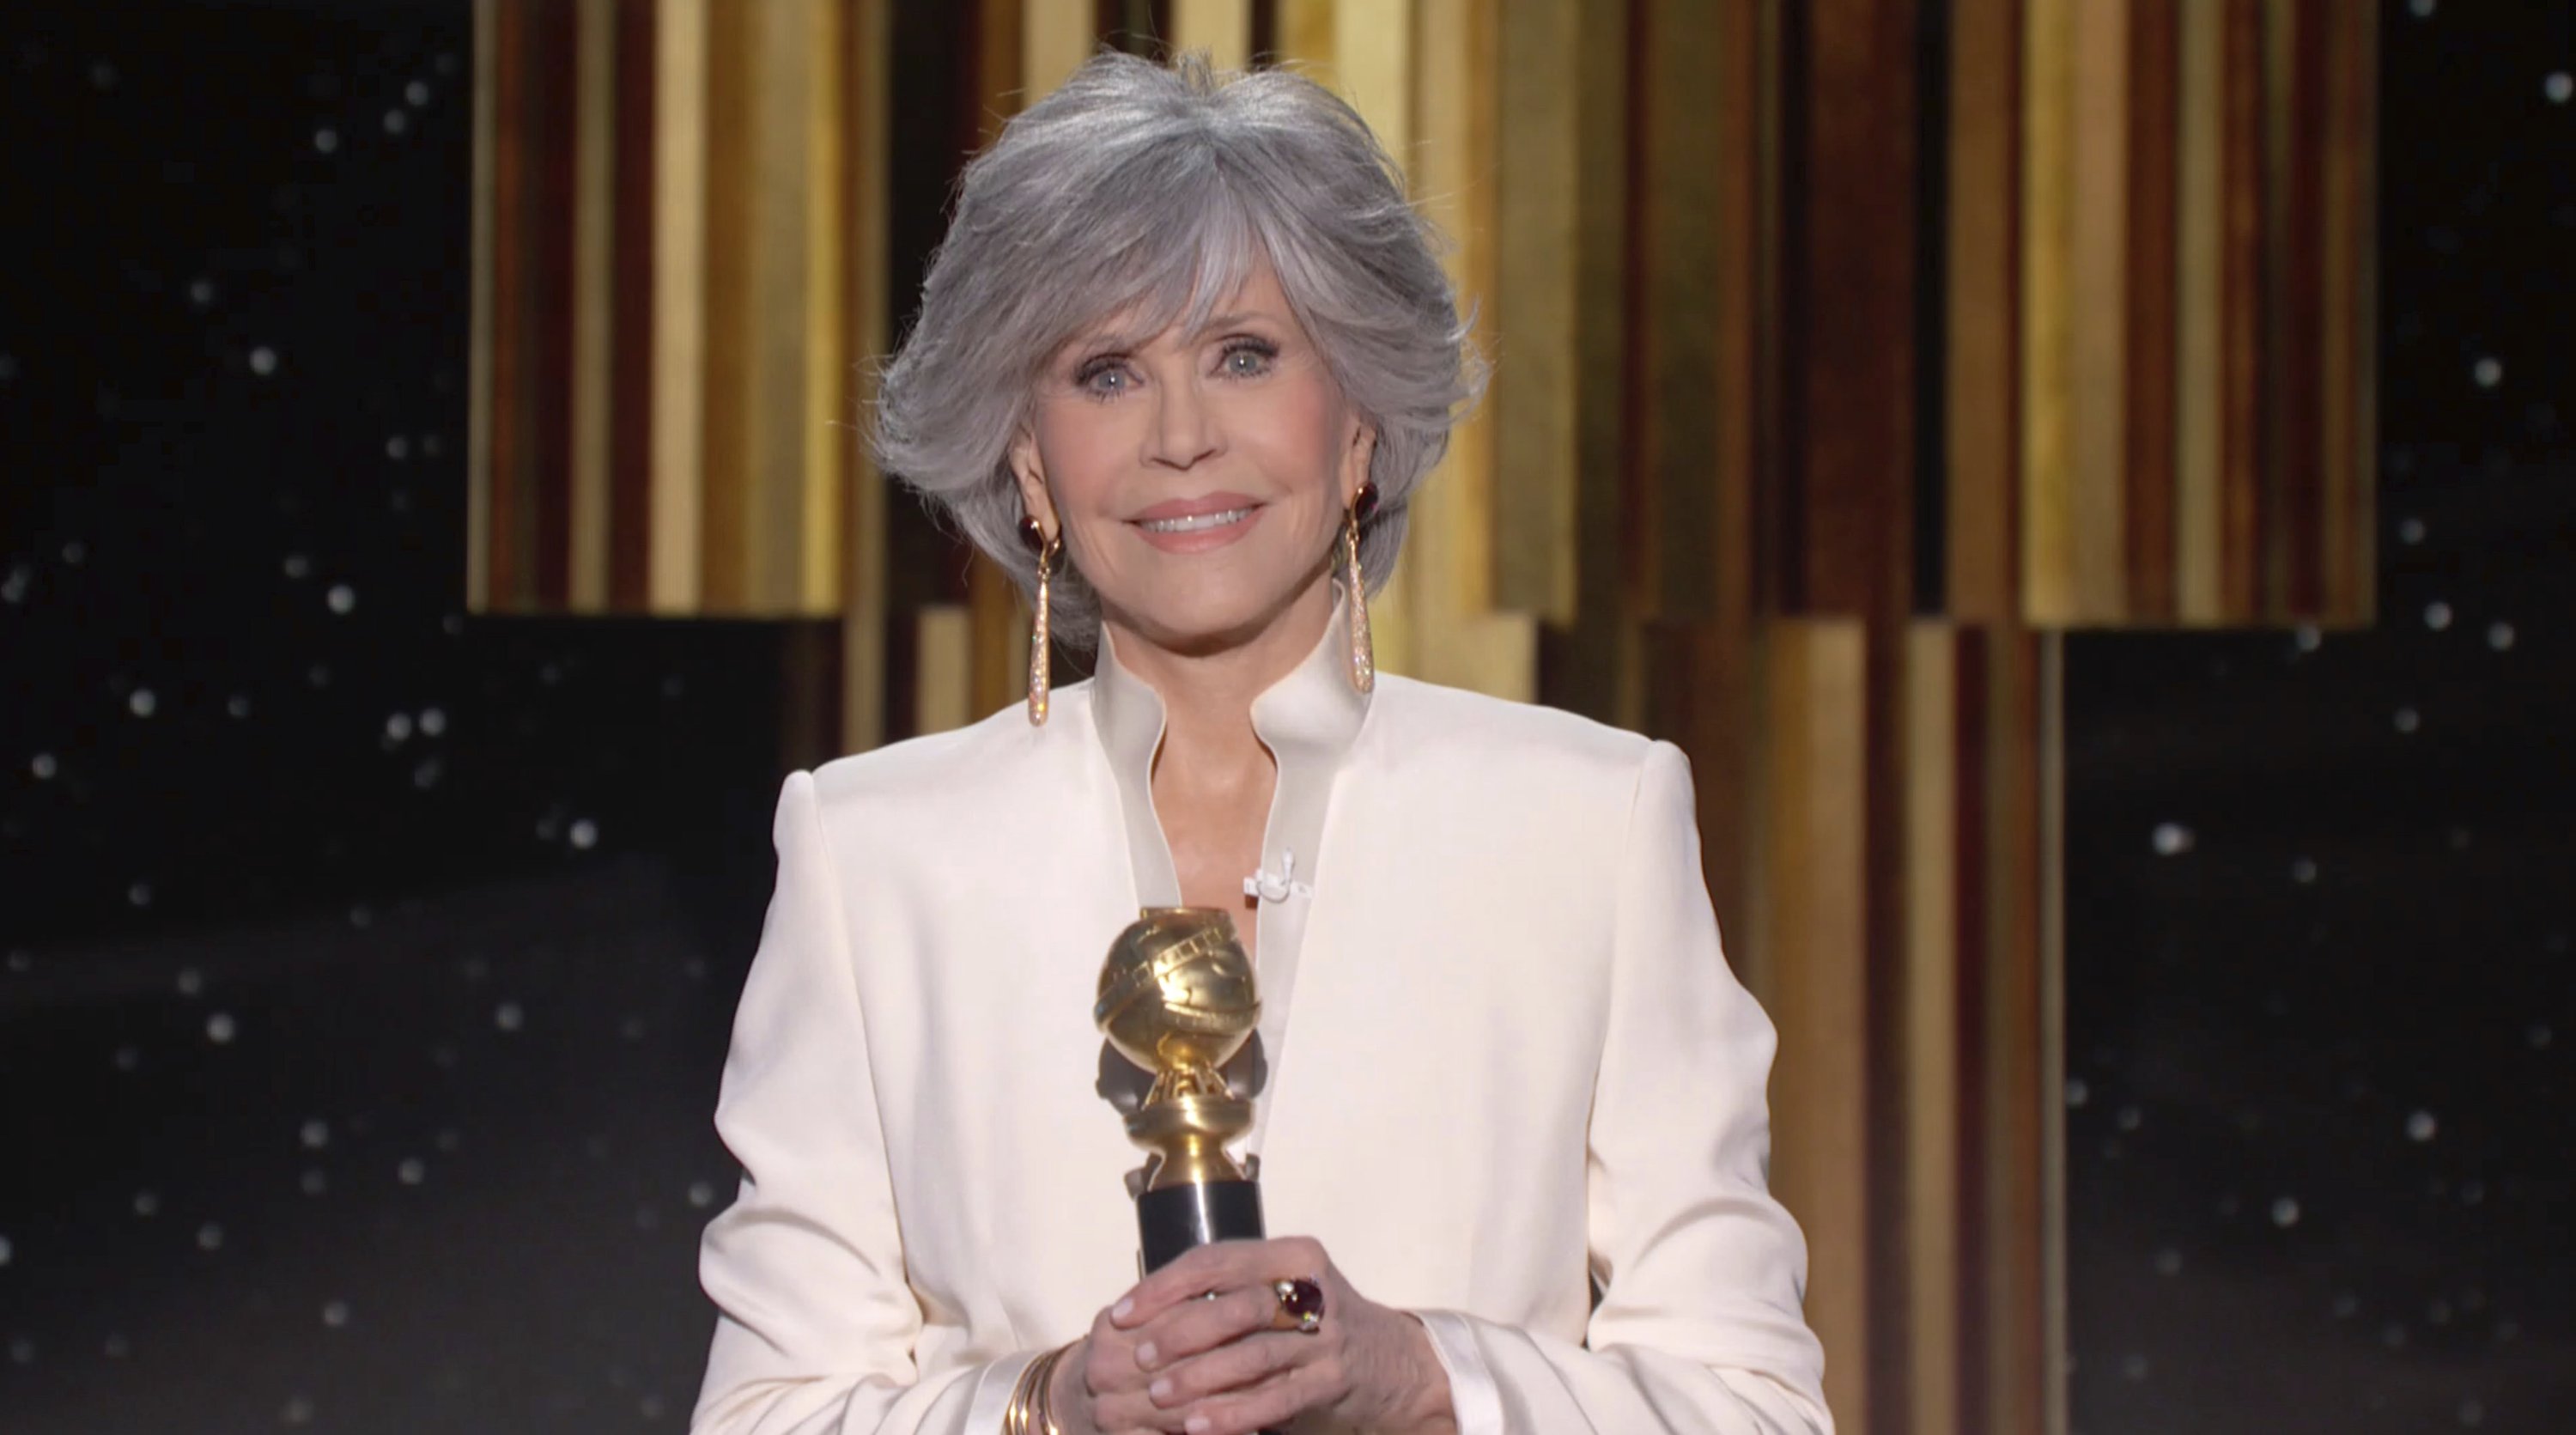 Fonda says Hollywood needs more diversity after Globes honor - Associated Press